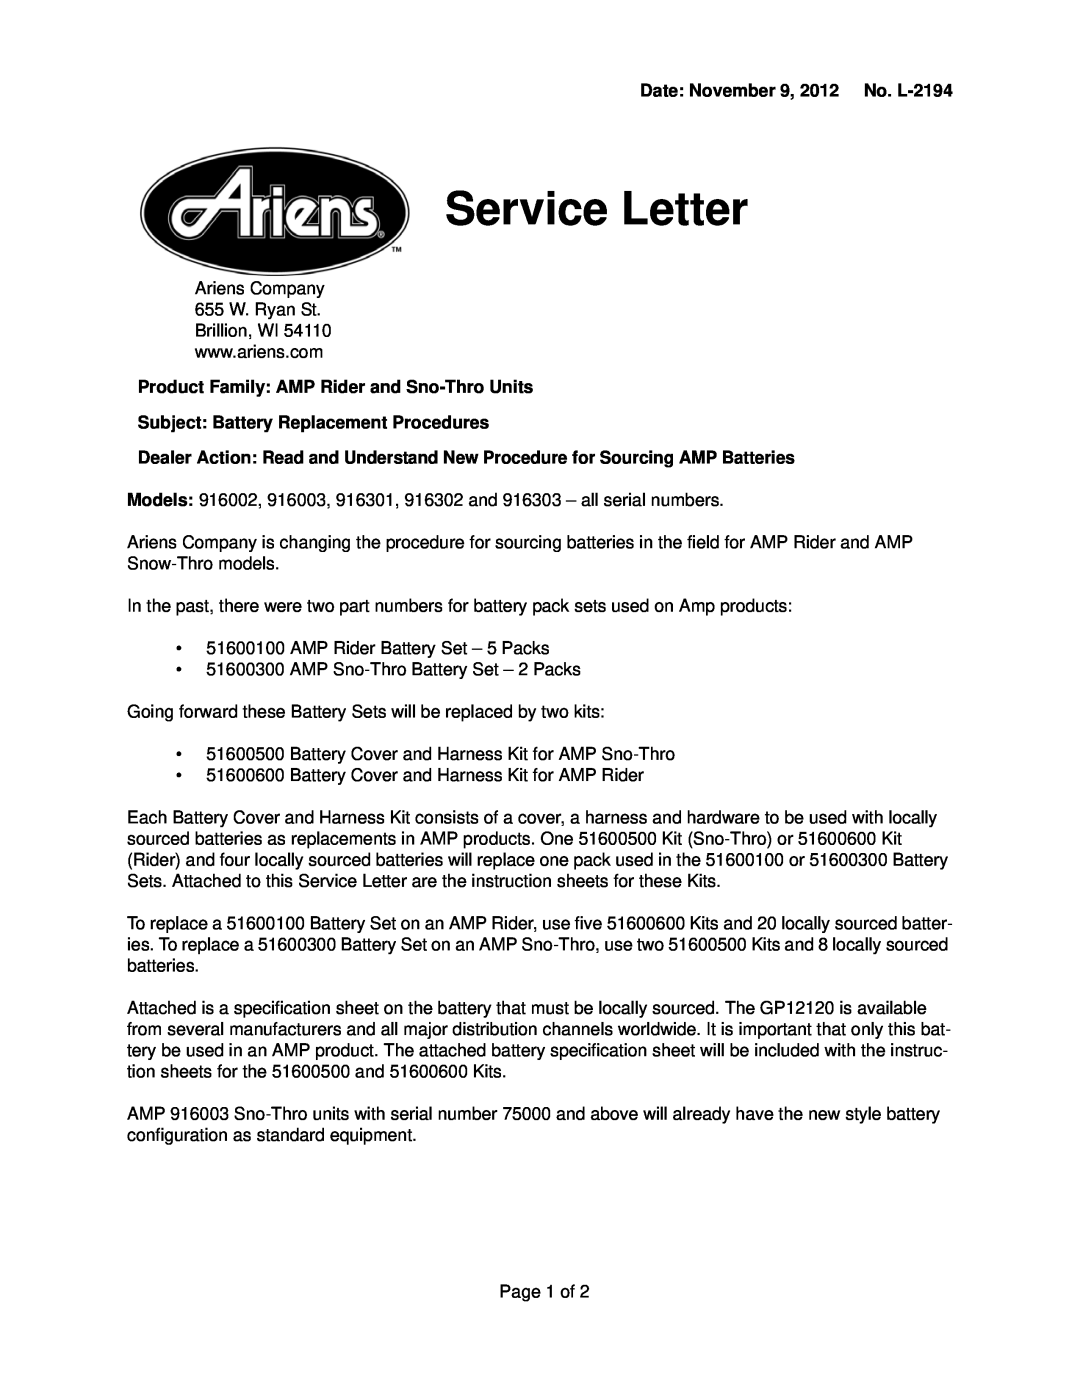 Ariens 916003, 916303 instruction sheet Date November 9, 2012 No. L-2194, Product Family AMP Rider and Sno-ThroUnits 